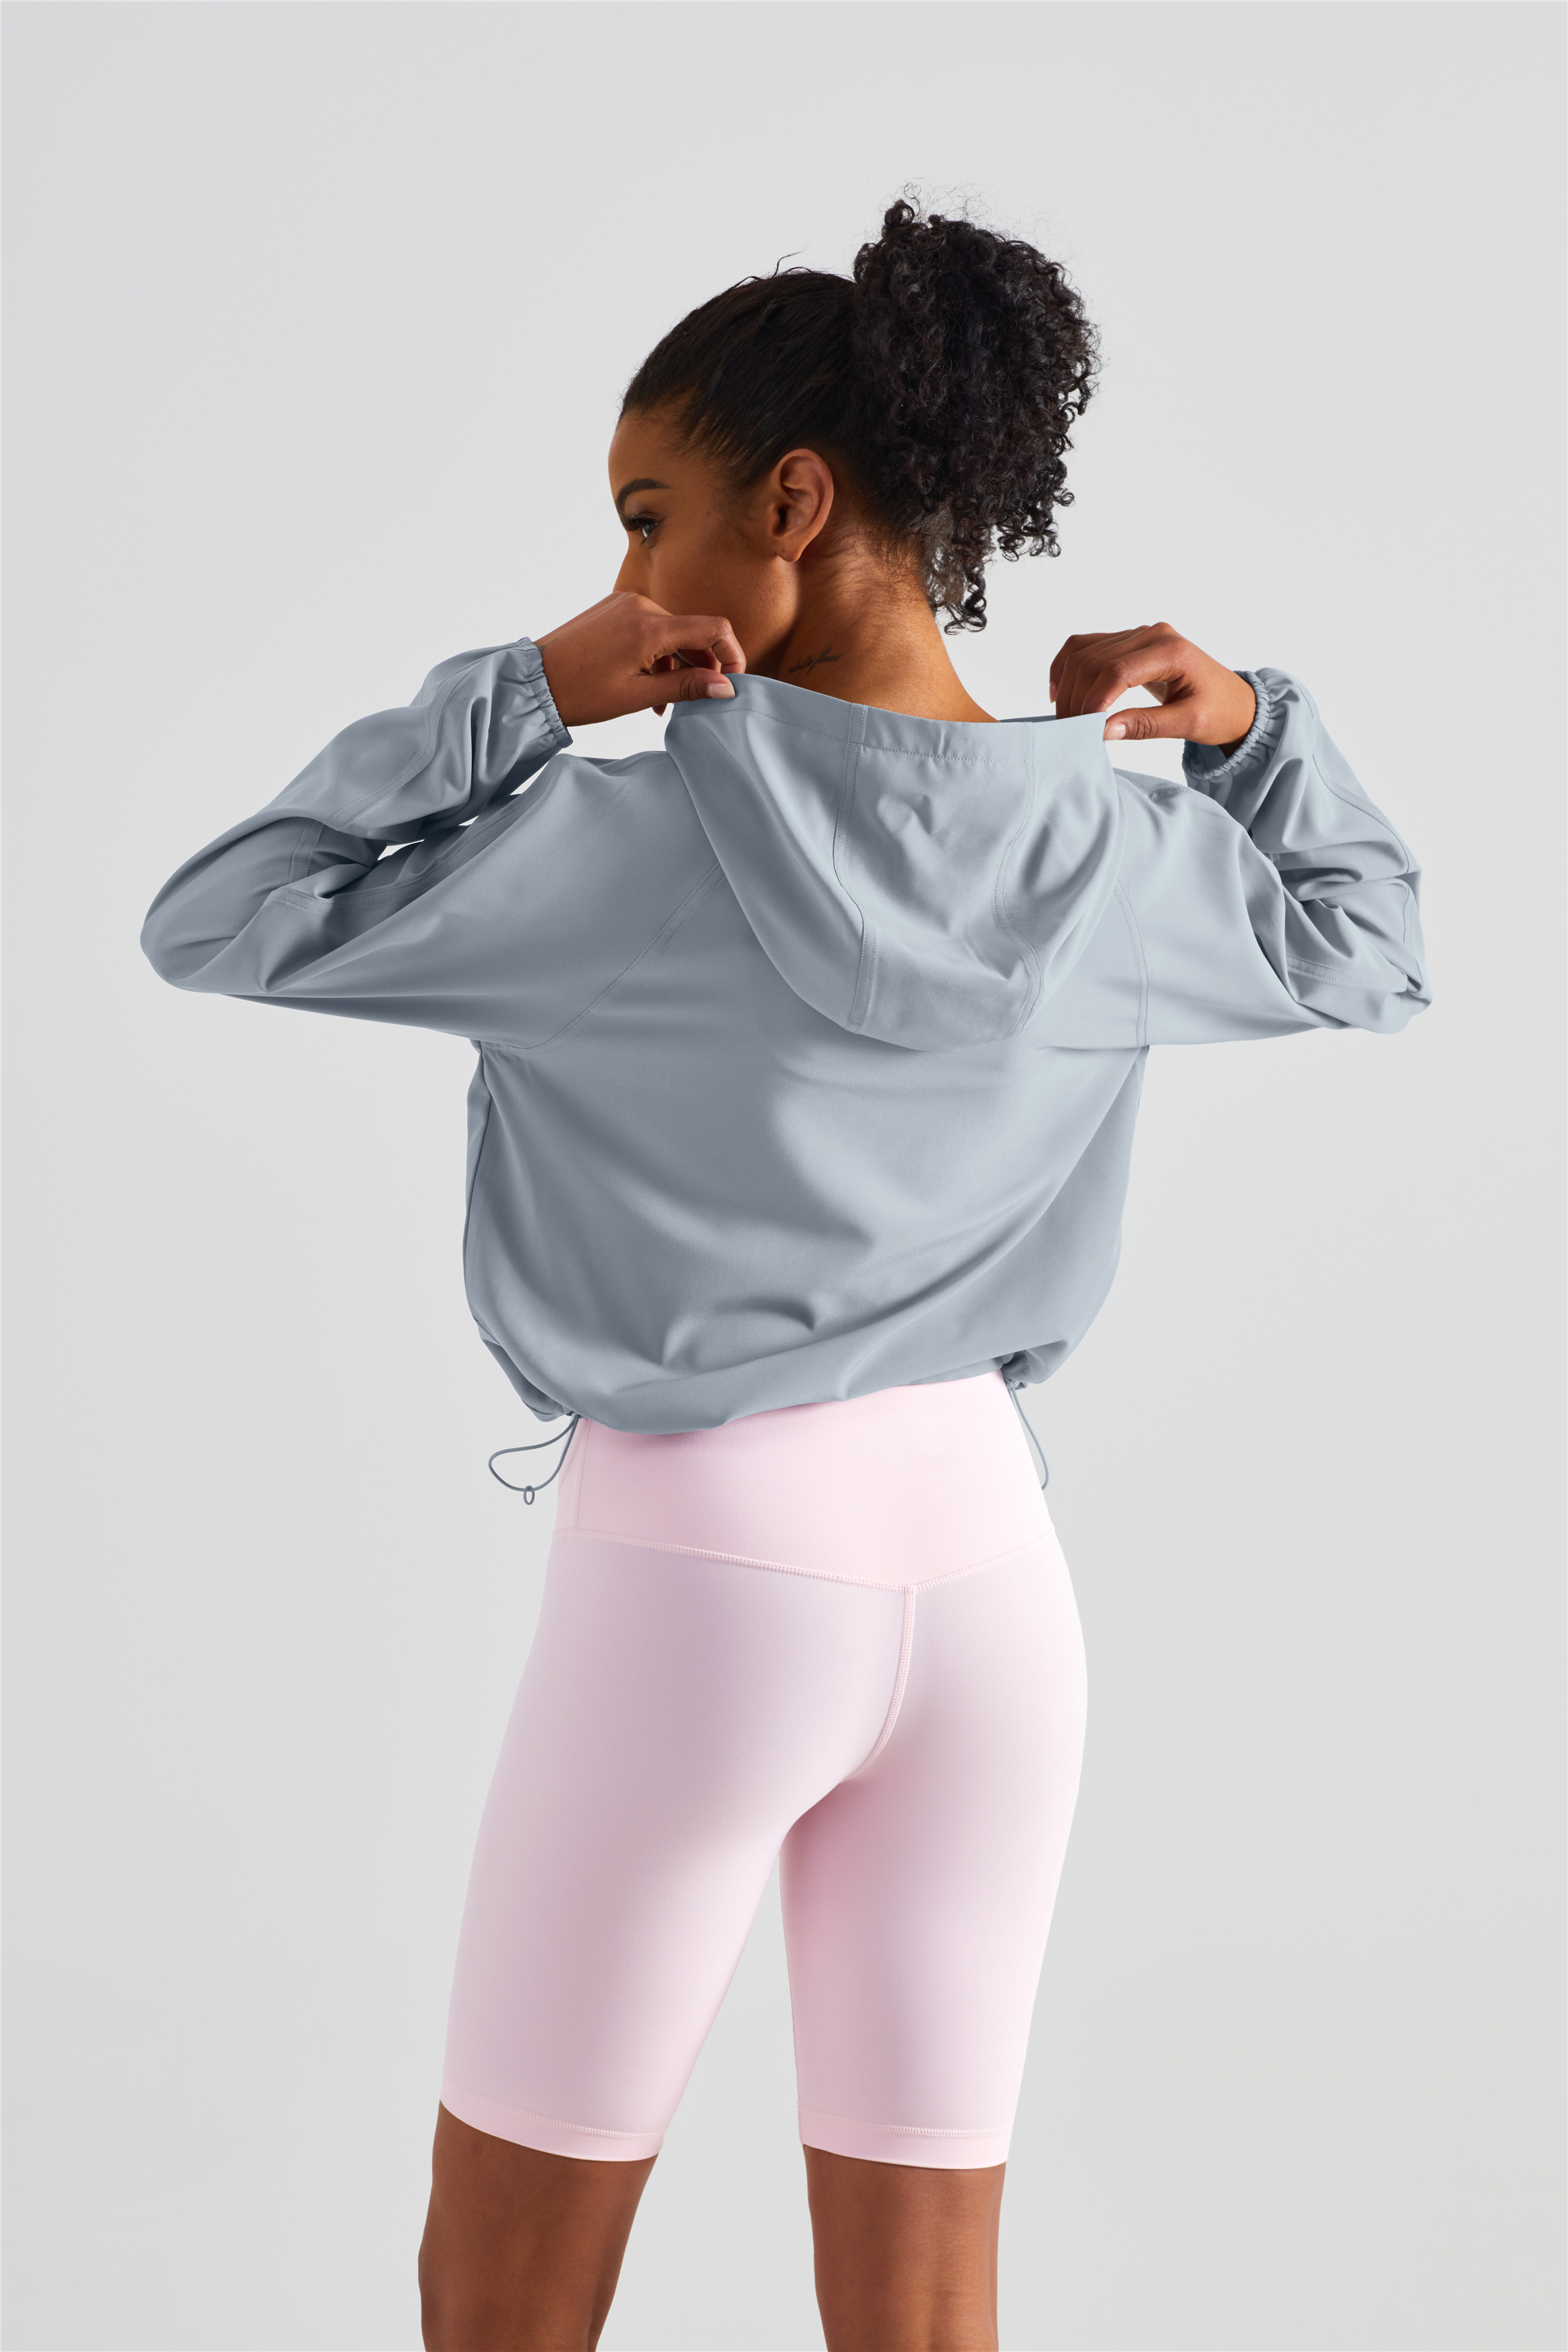 Hergymclothing active sports jacket and pink yoga leggins for sale